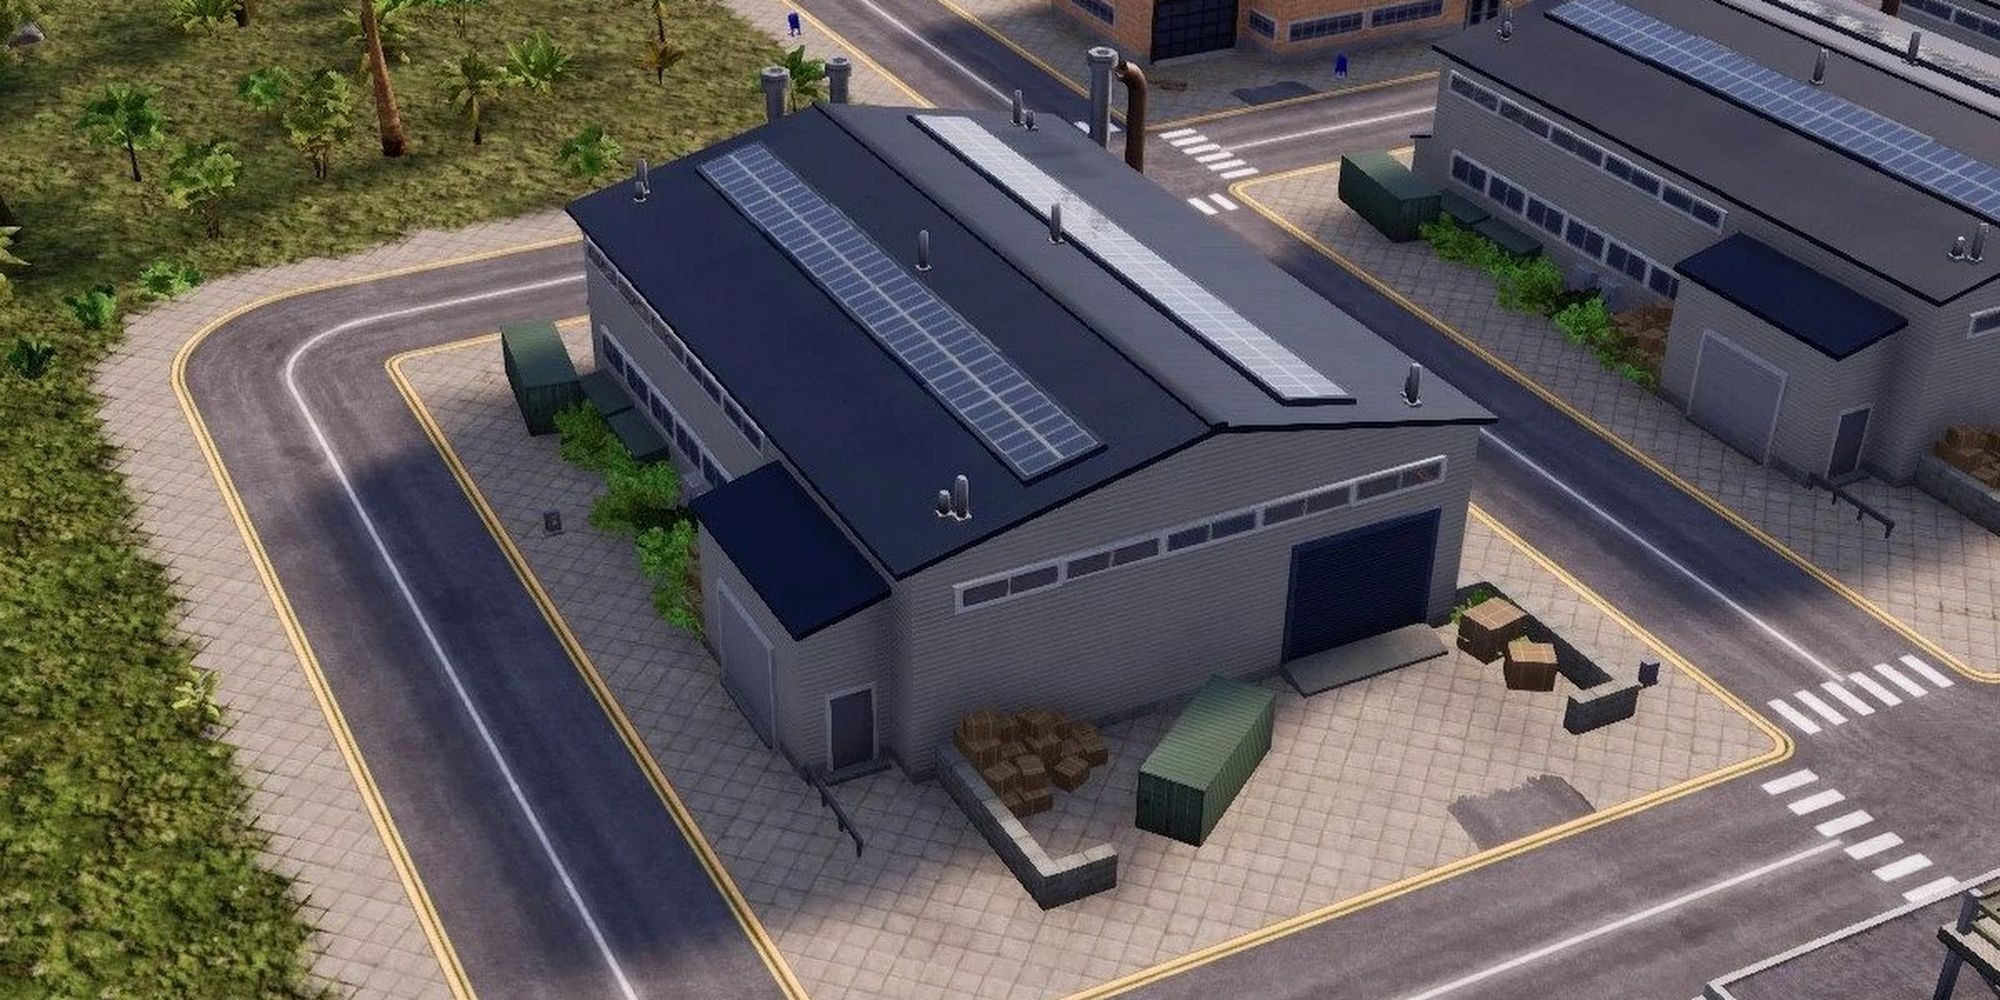 Teamster Office In Tropico 6 In The Modern Era